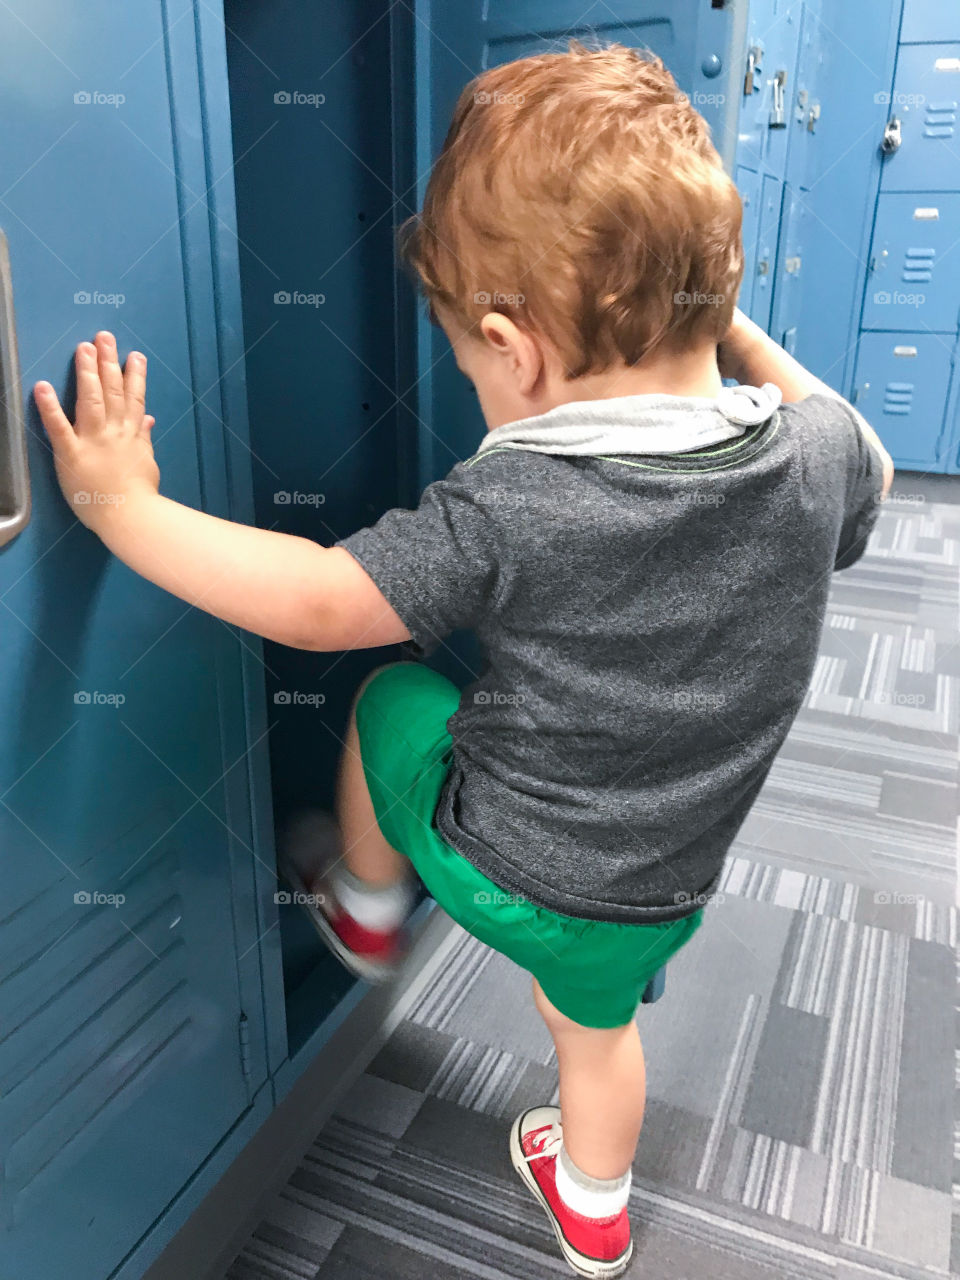 Climbing into the locker 